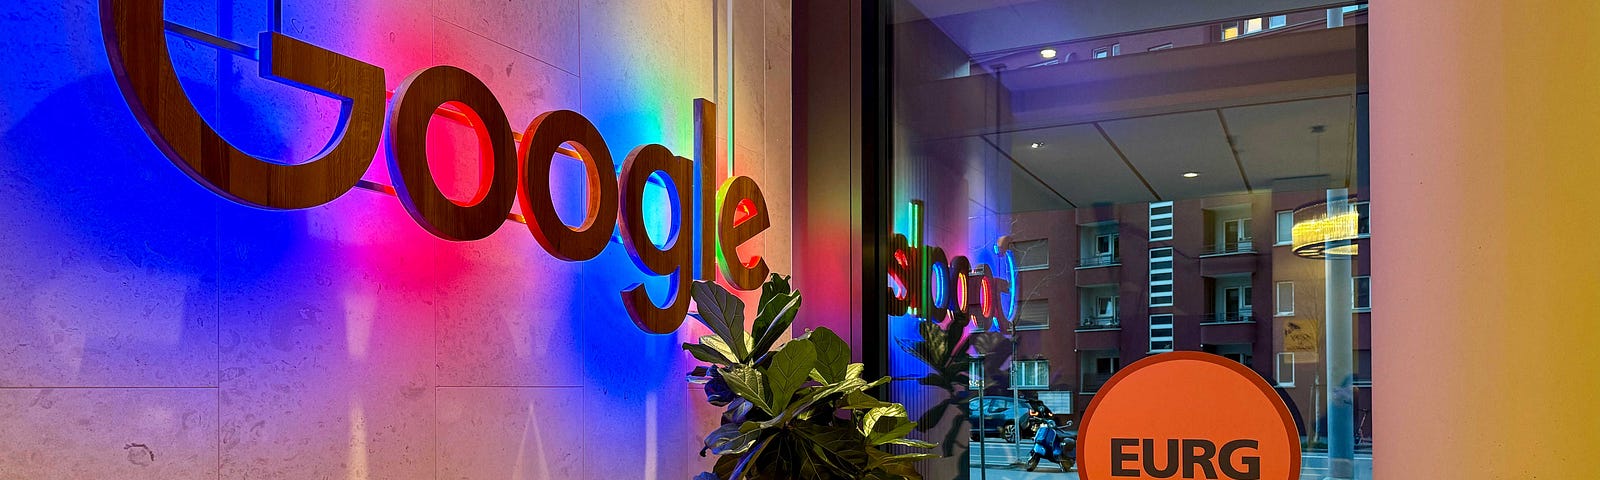 Google office with big Google logo